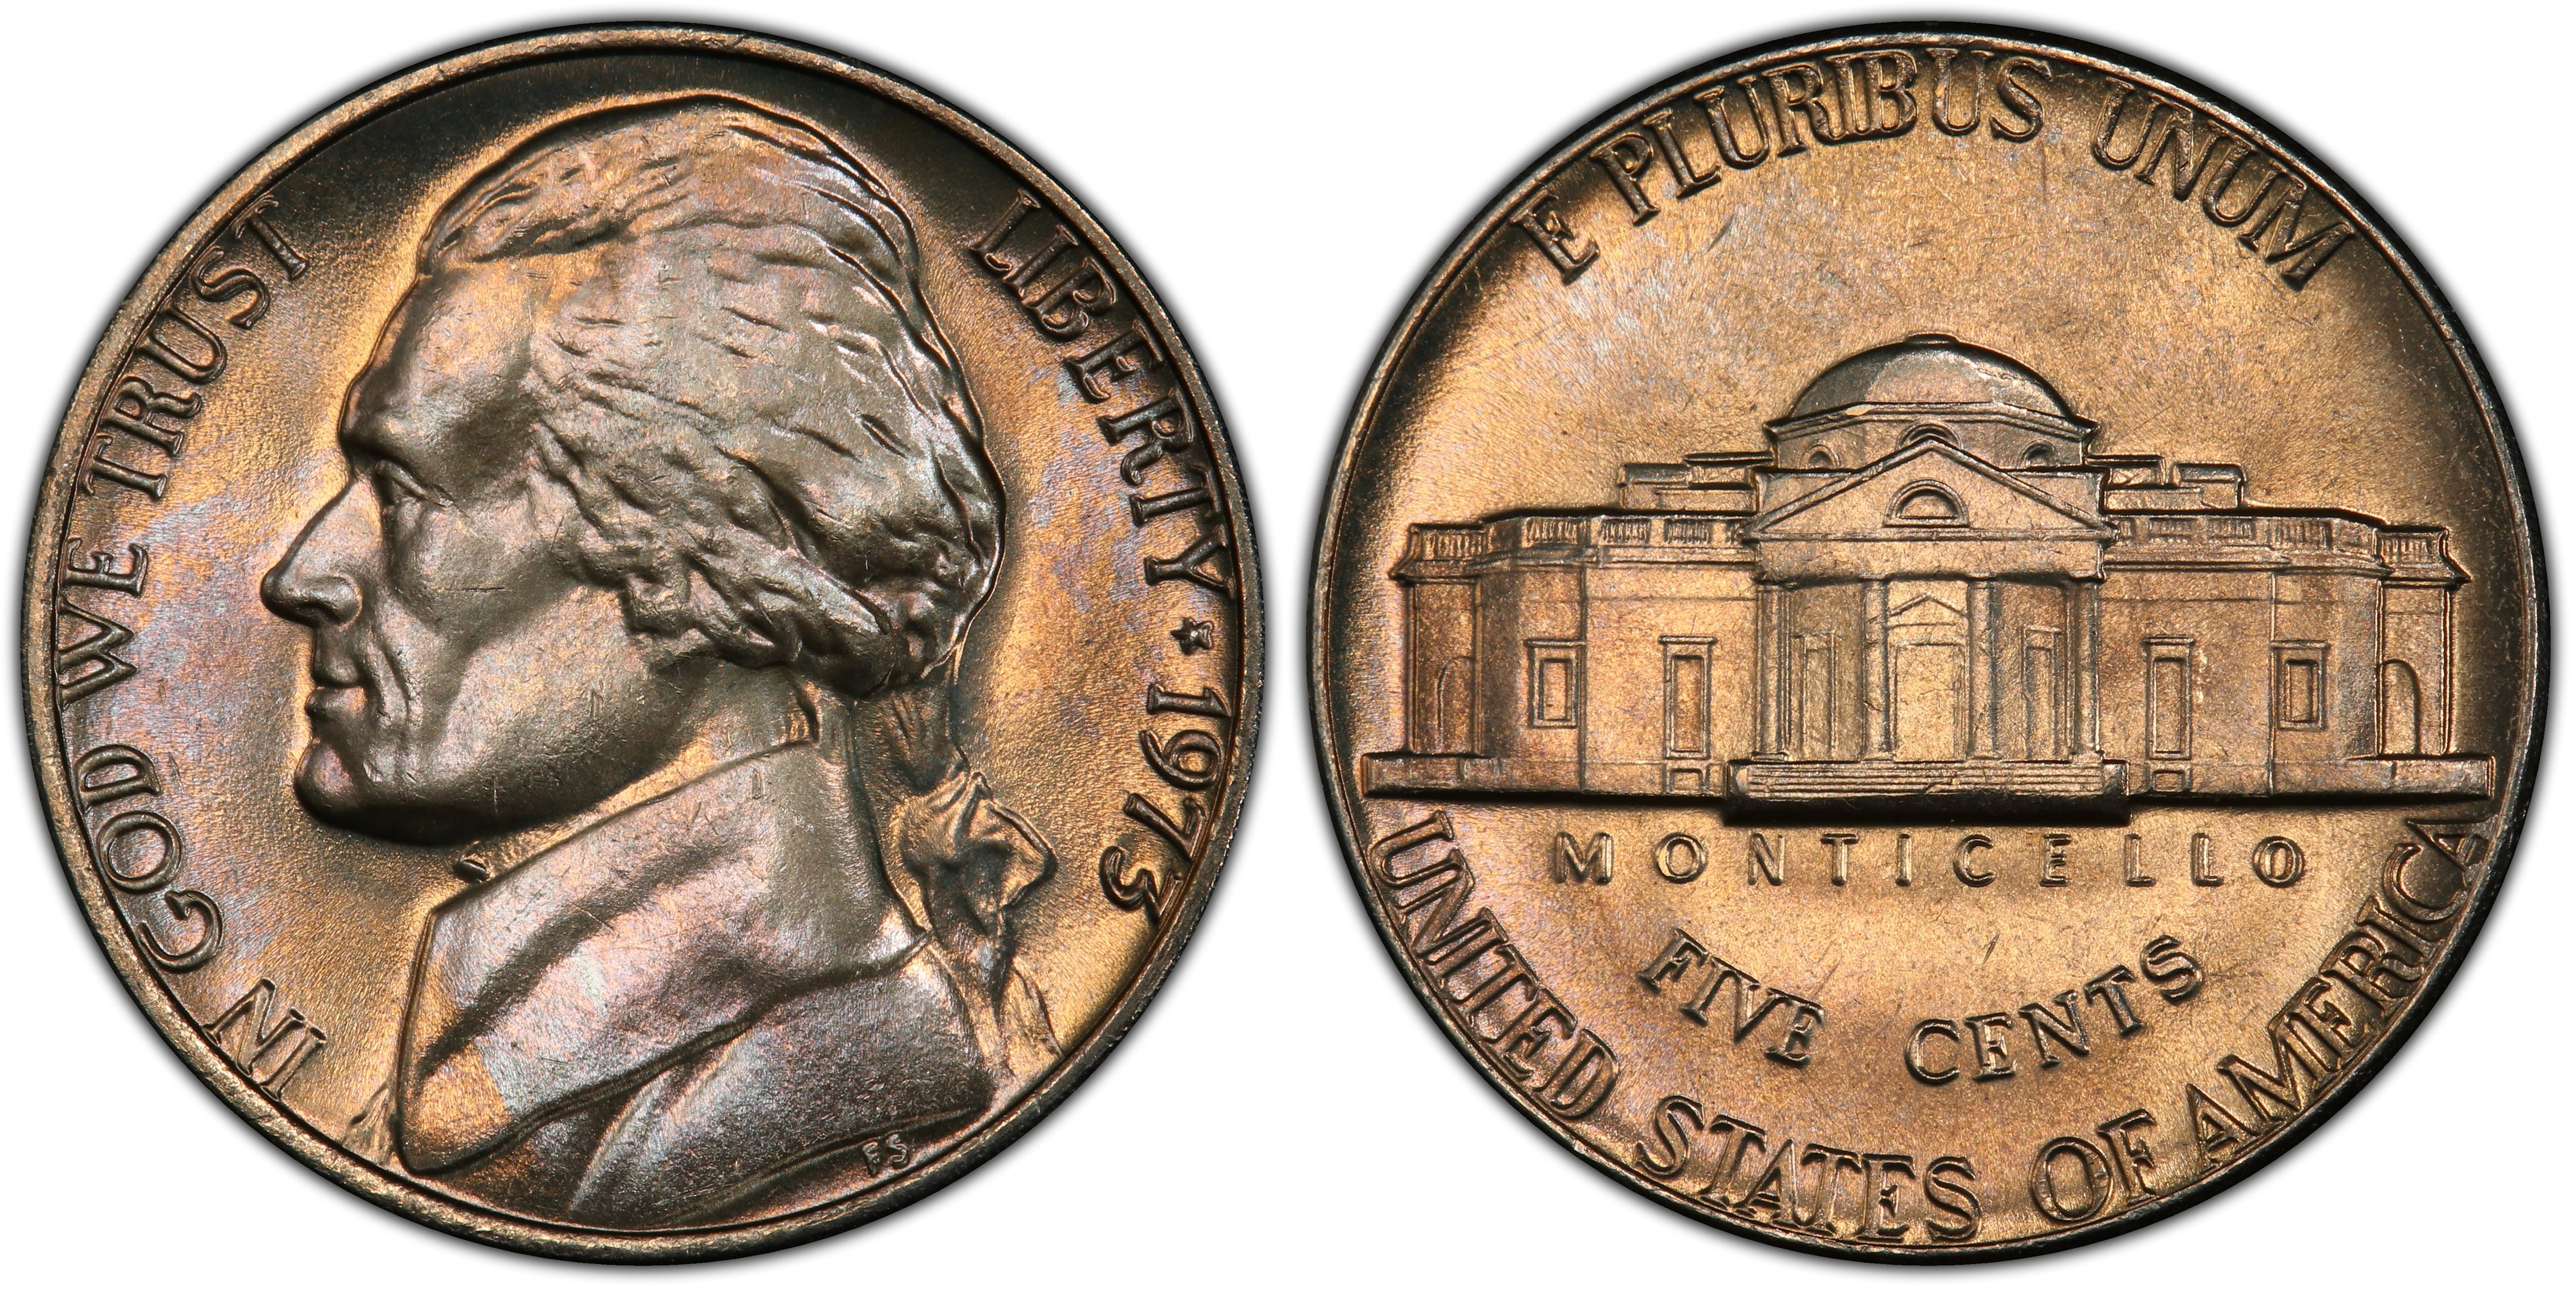 UNCIRCULATED 1973D USA Jefferson Nickel 